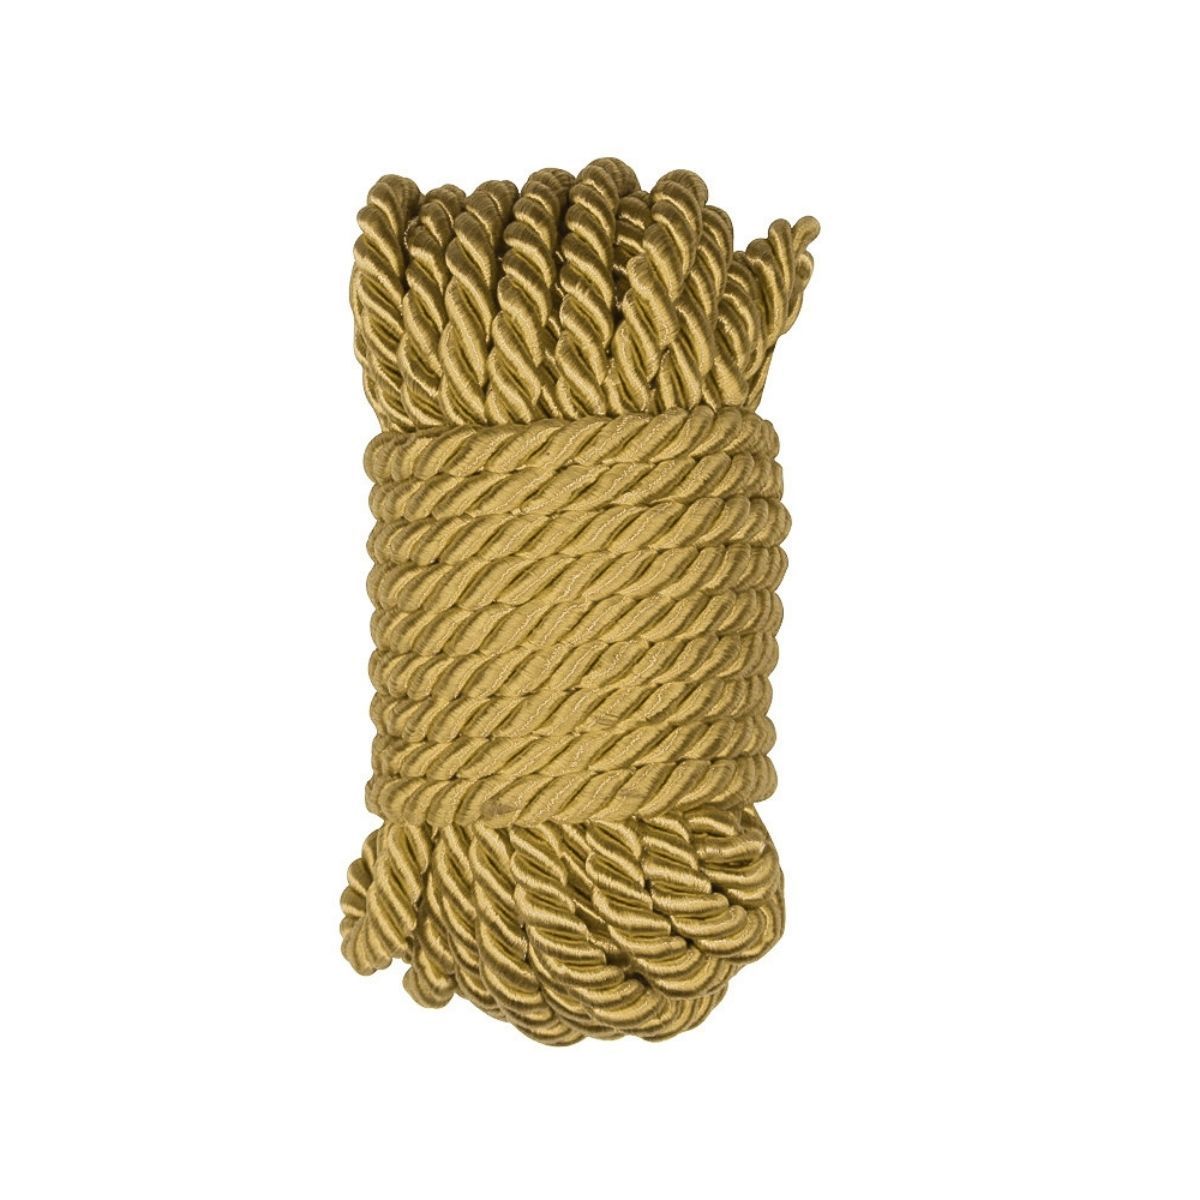 GINN 調教捆綁繩子 10 米 綁縛繩子 金色 購買